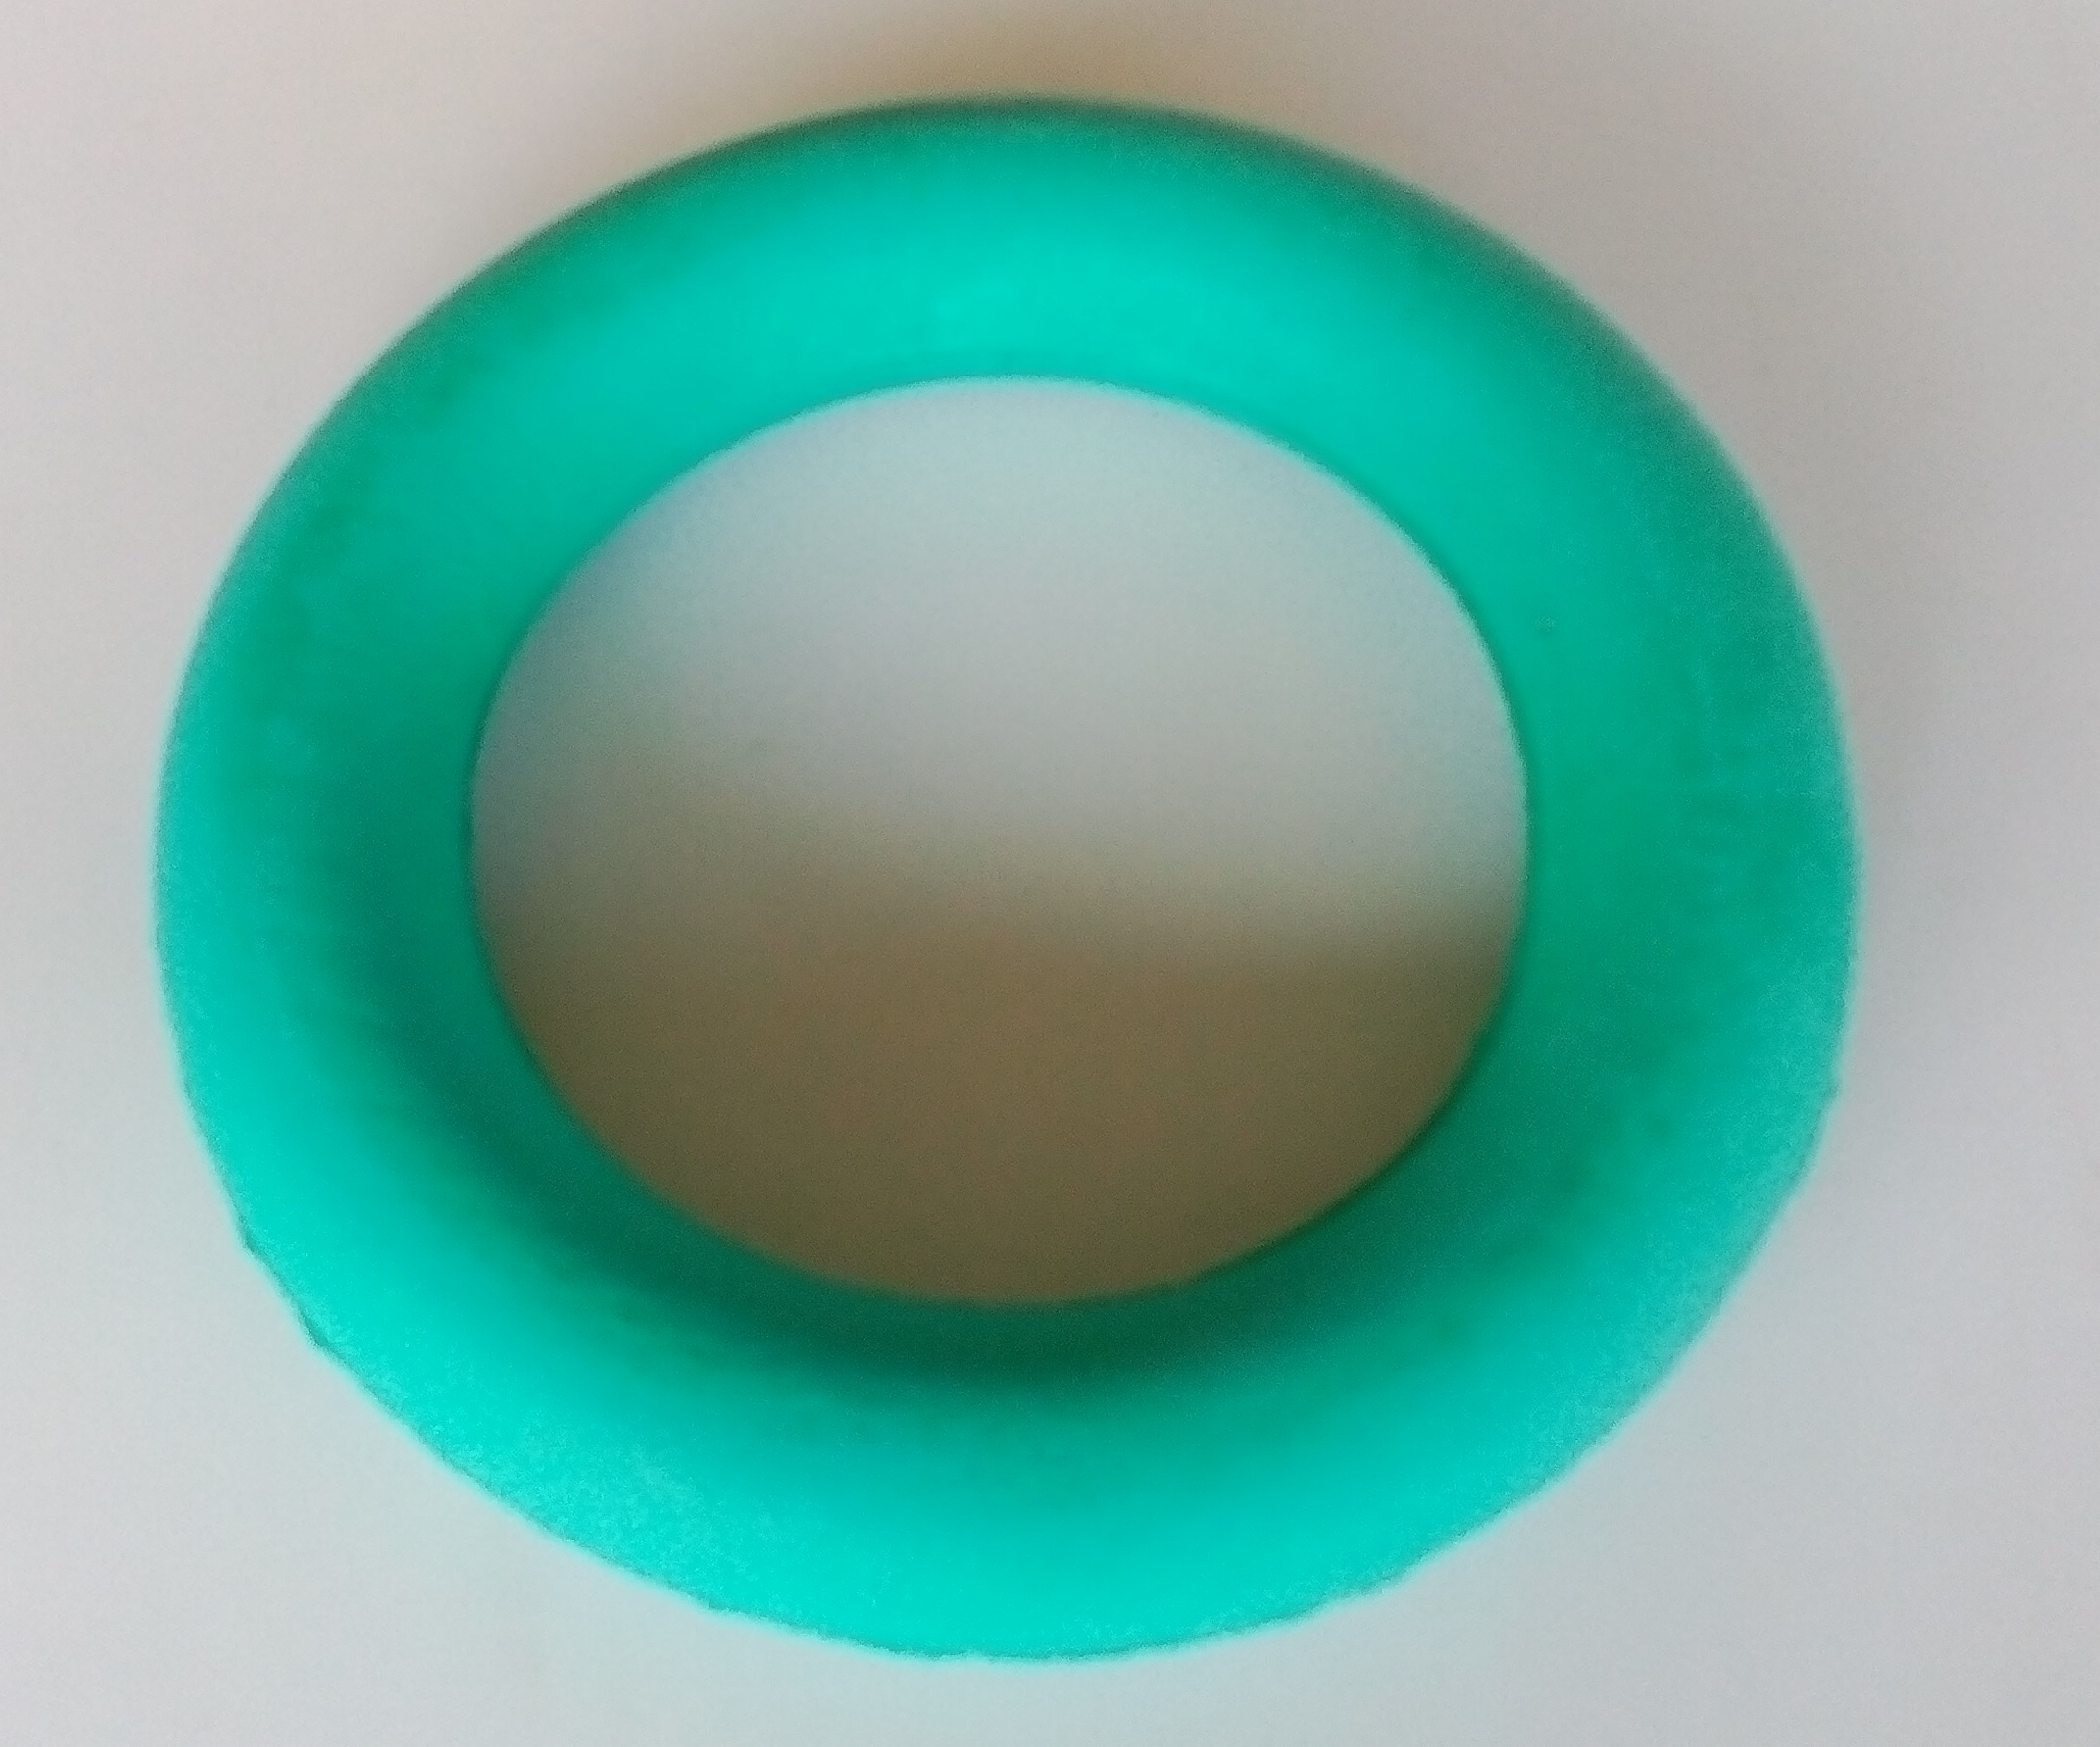 Ringo kroužek zelený UNISON UN 2306